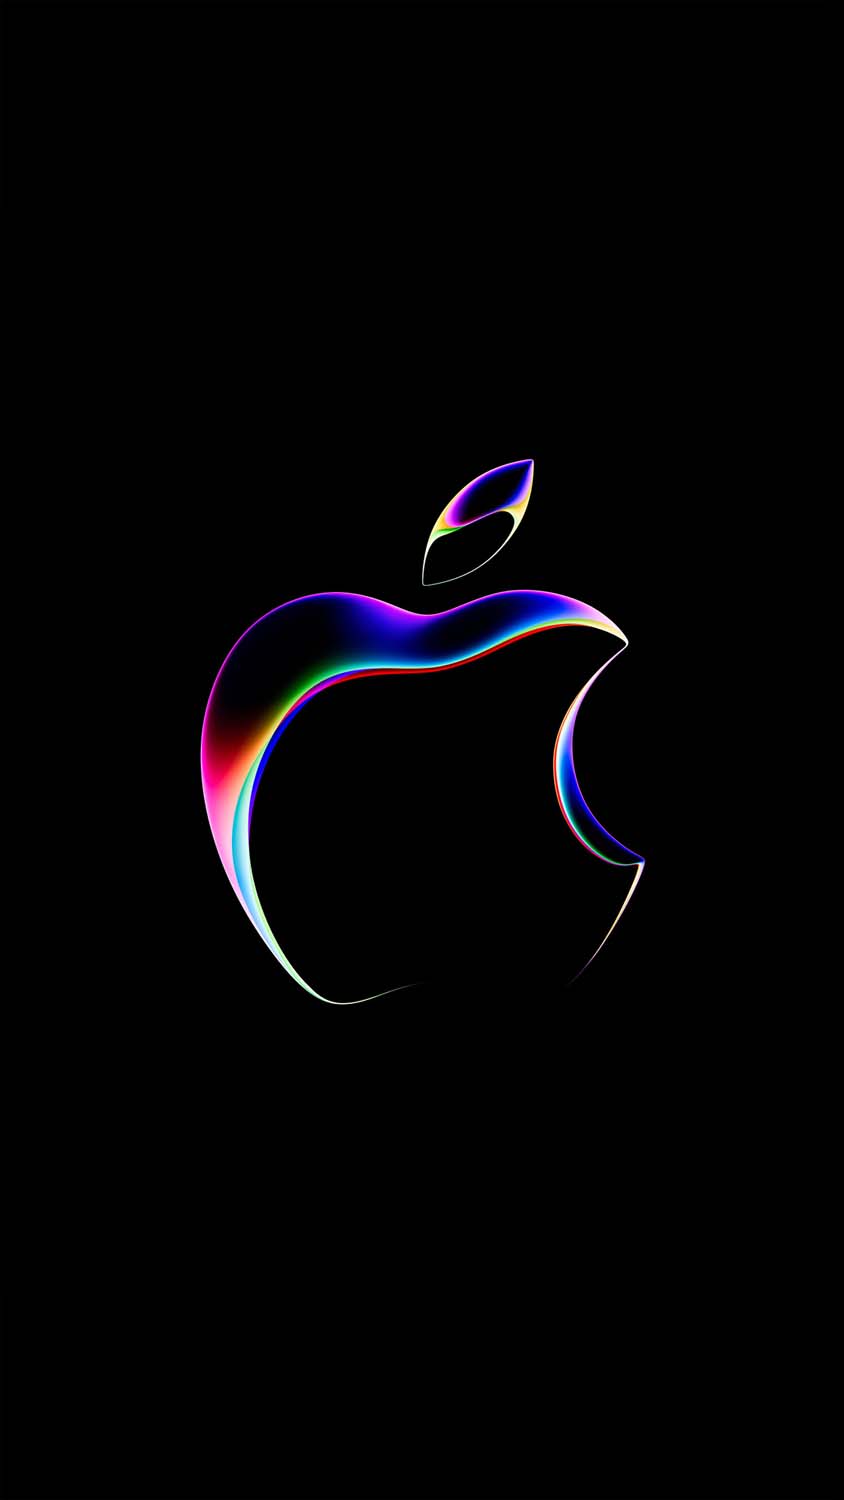 Apple WWDC Logo iPhone Wallpaper